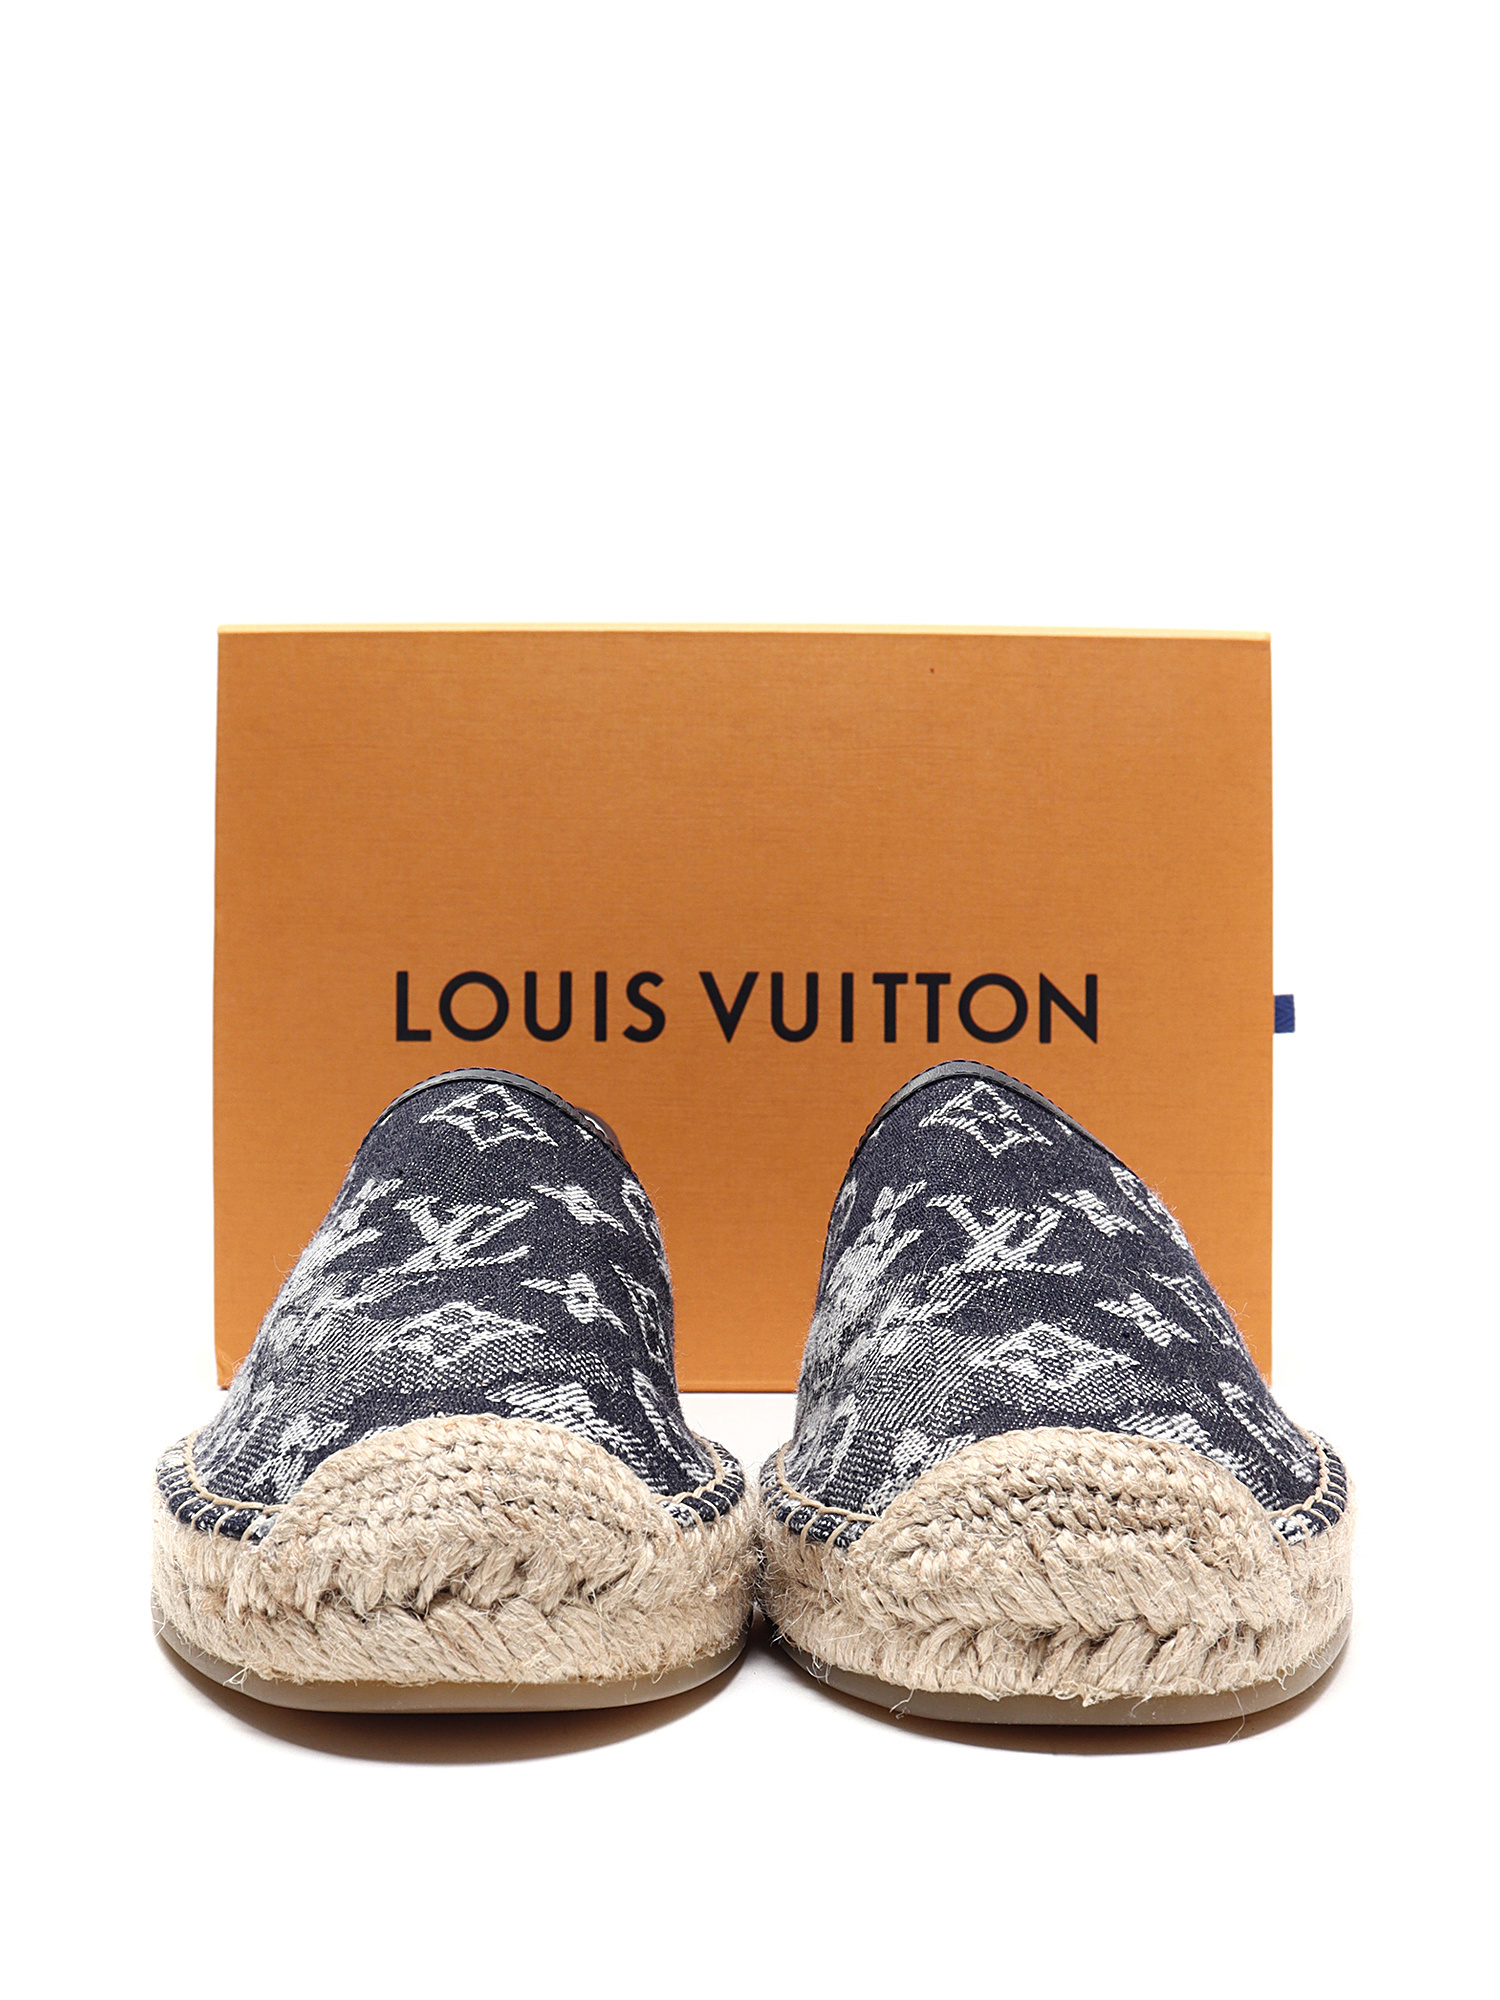 Louis Vuitton Printed Espadrilles